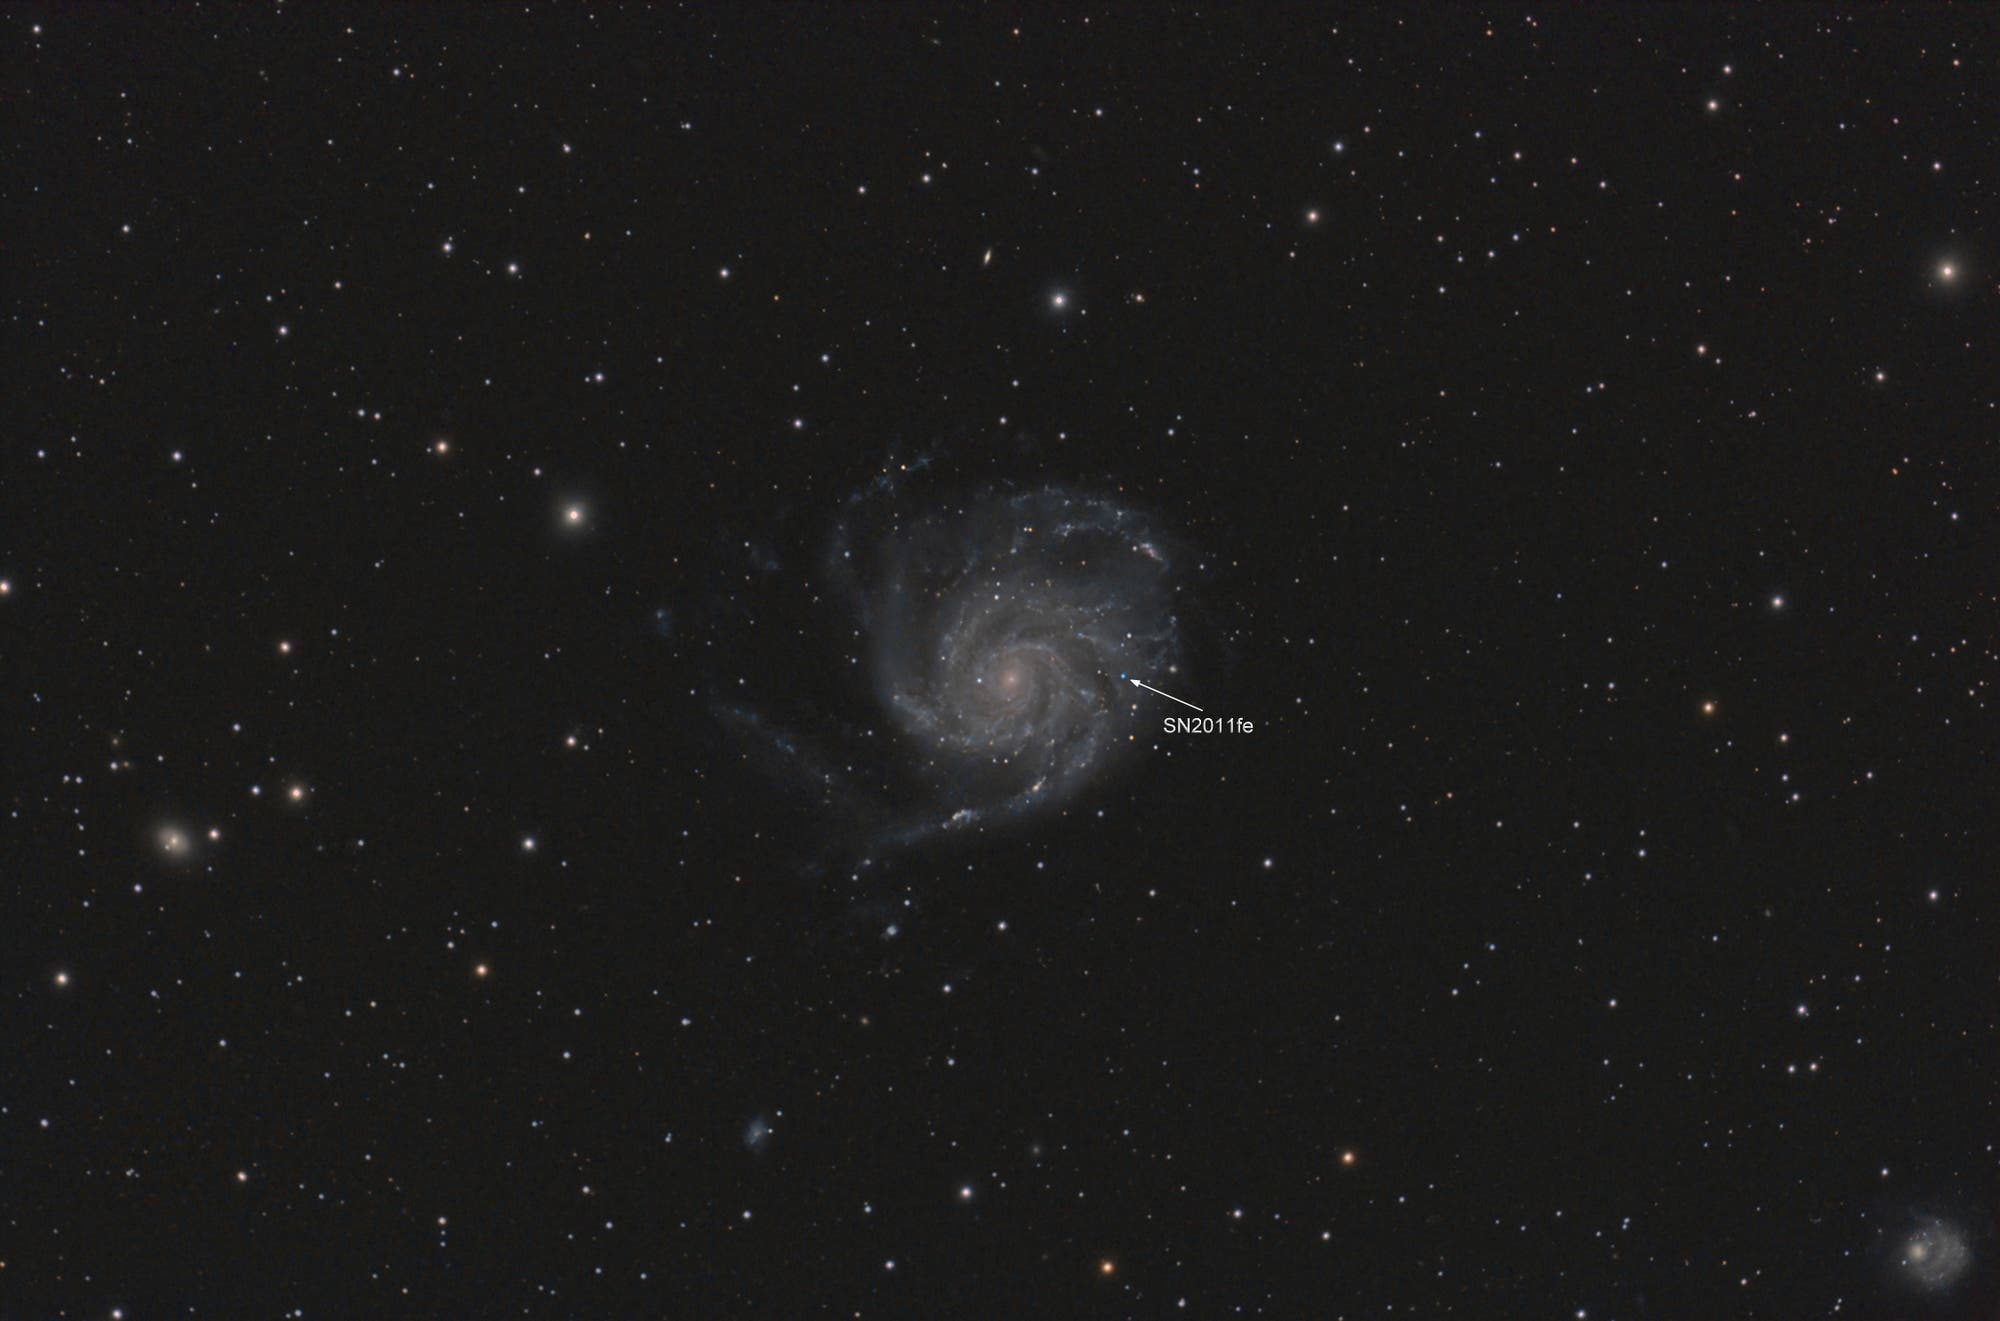 SN 2011fe in Messier 101